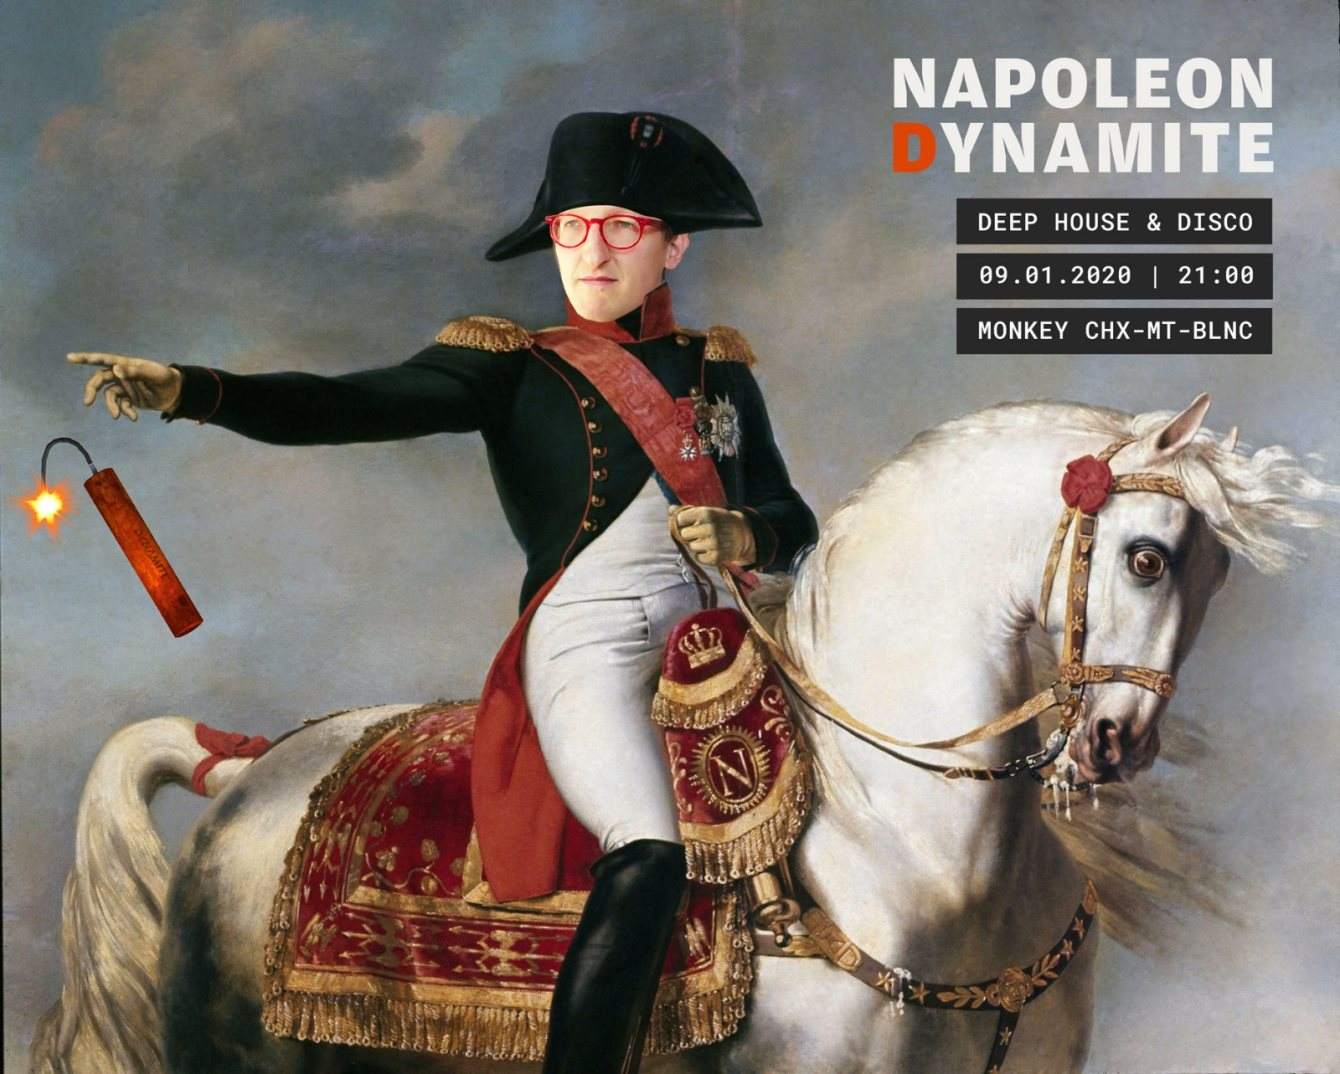 napoleon dynamite flyer